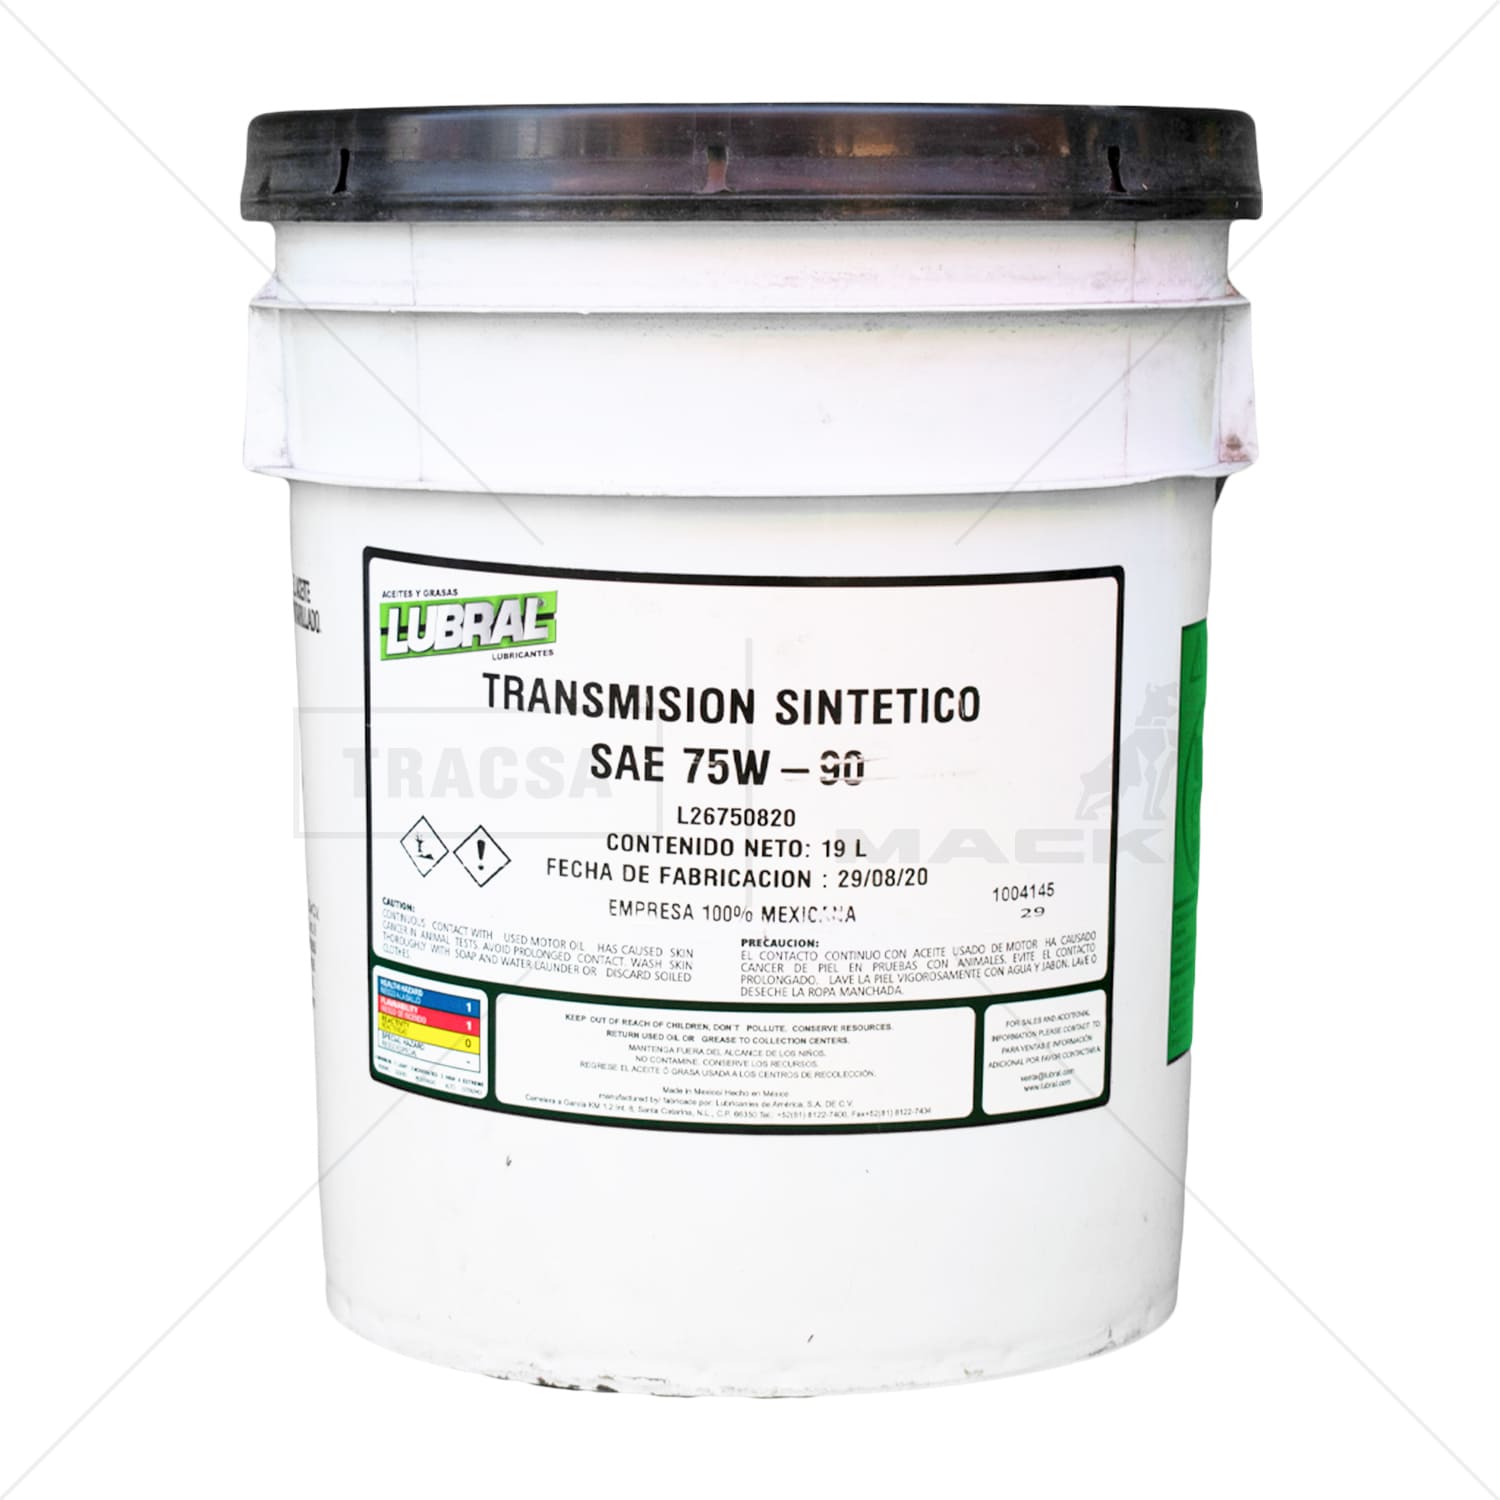 Aceite Transmisión sintetico SAE 75w-90 Lubral 1004145